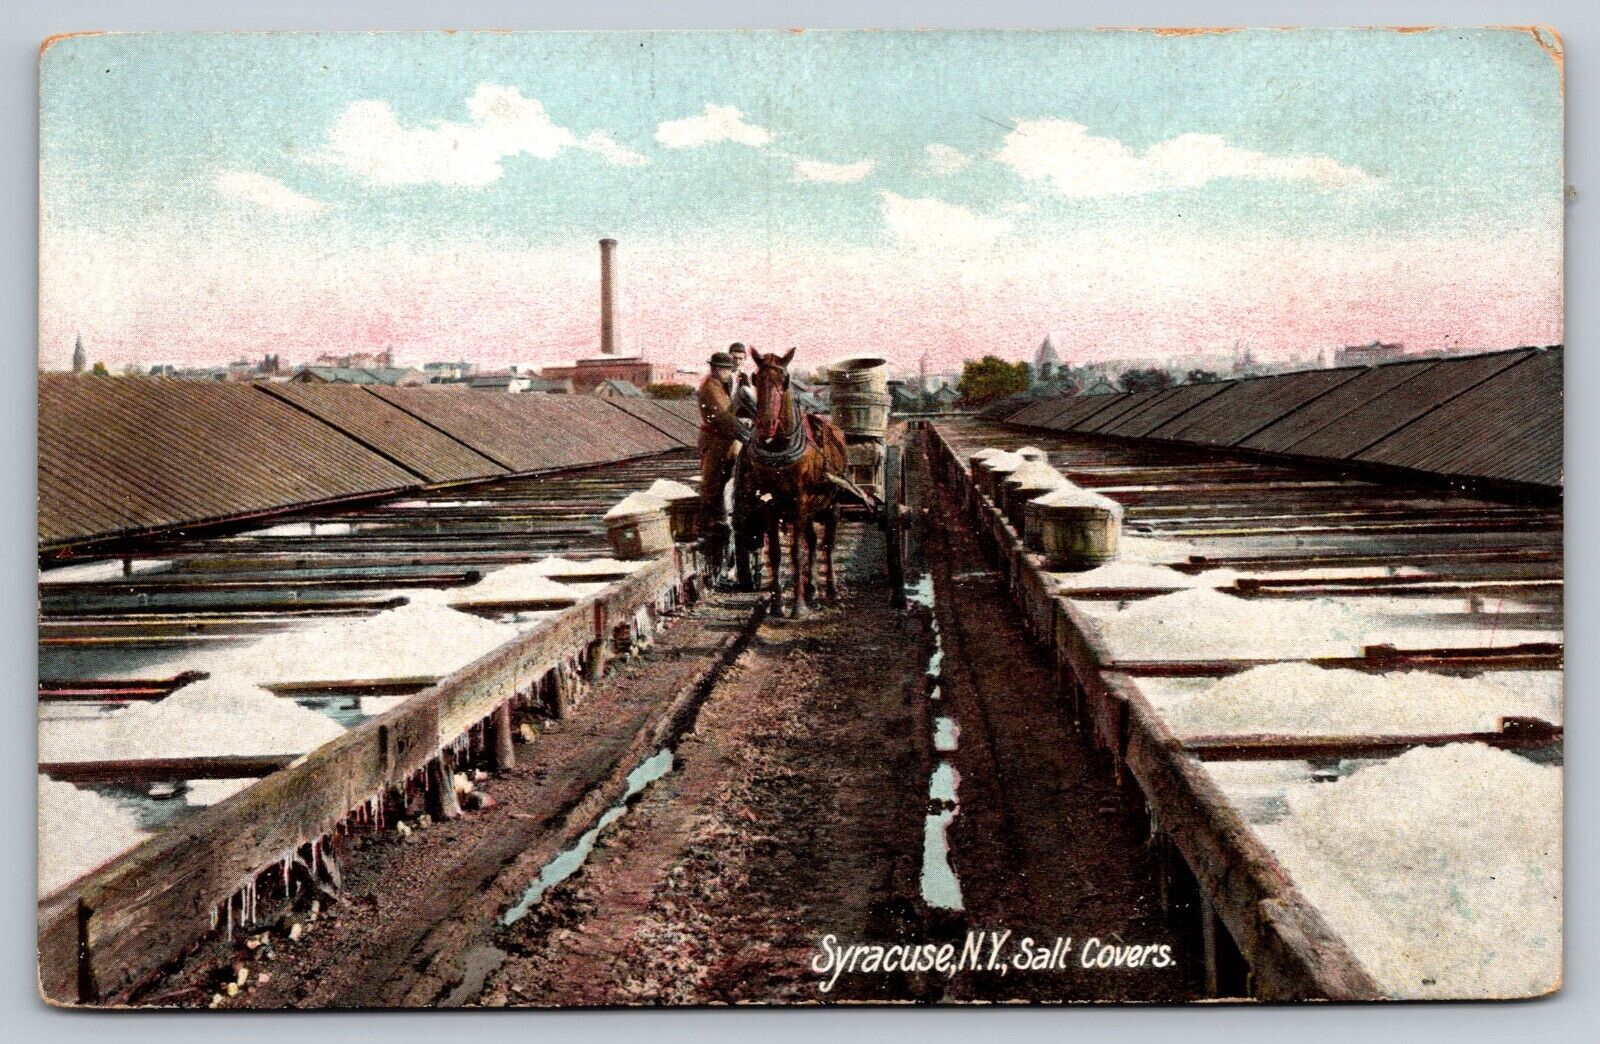 rare Syracuse, NY vintage postcard - Salt Covers w/ horse wagon